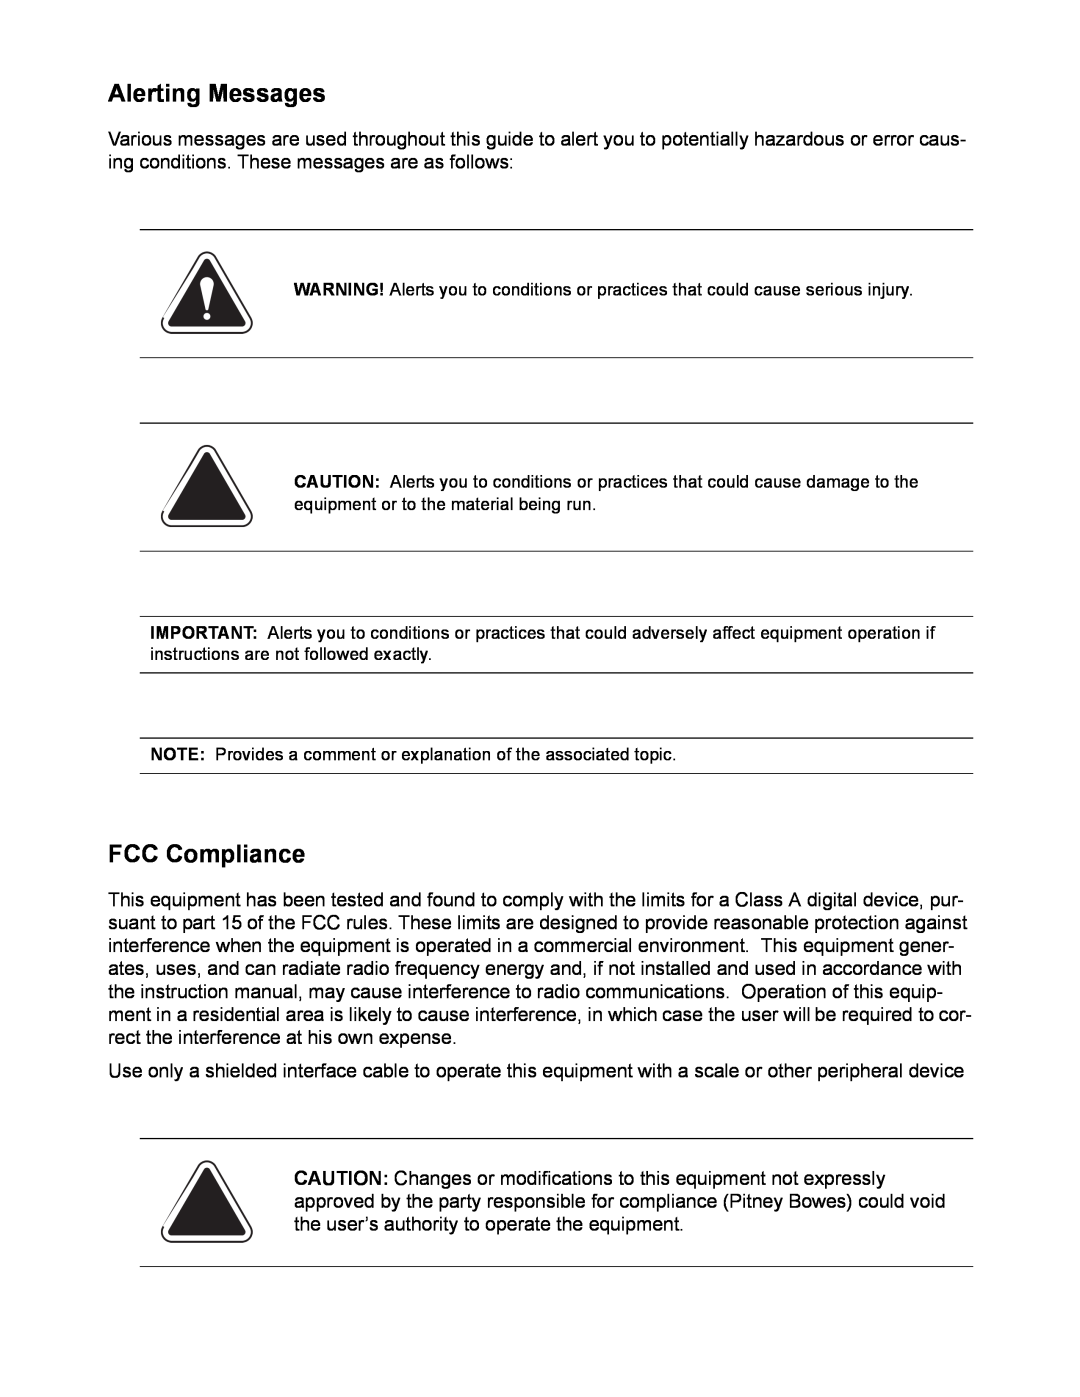 Pitney Bowes DM900, DM800 manual Alerting Messages, FCC Compliance 